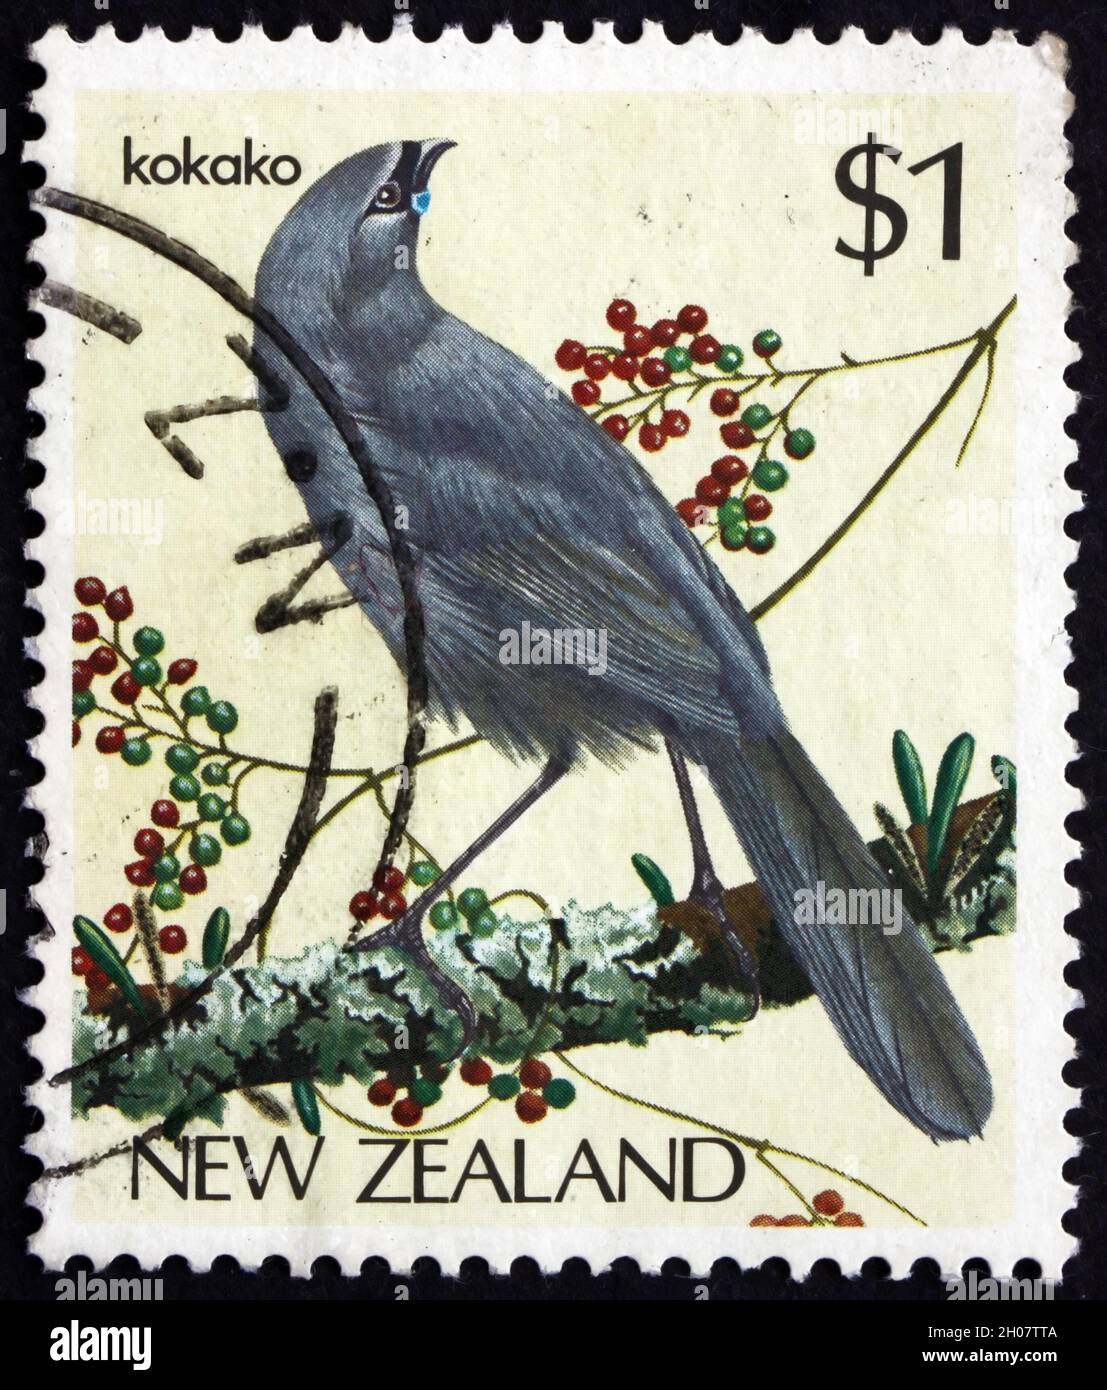 NUOVA ZELANDA - CIRCA 1985: Un francobollo stampato in Nuova Zelanda mostra Kokako, Callaeas wilsoni, Wattlebird, circa 1985 Foto Stock